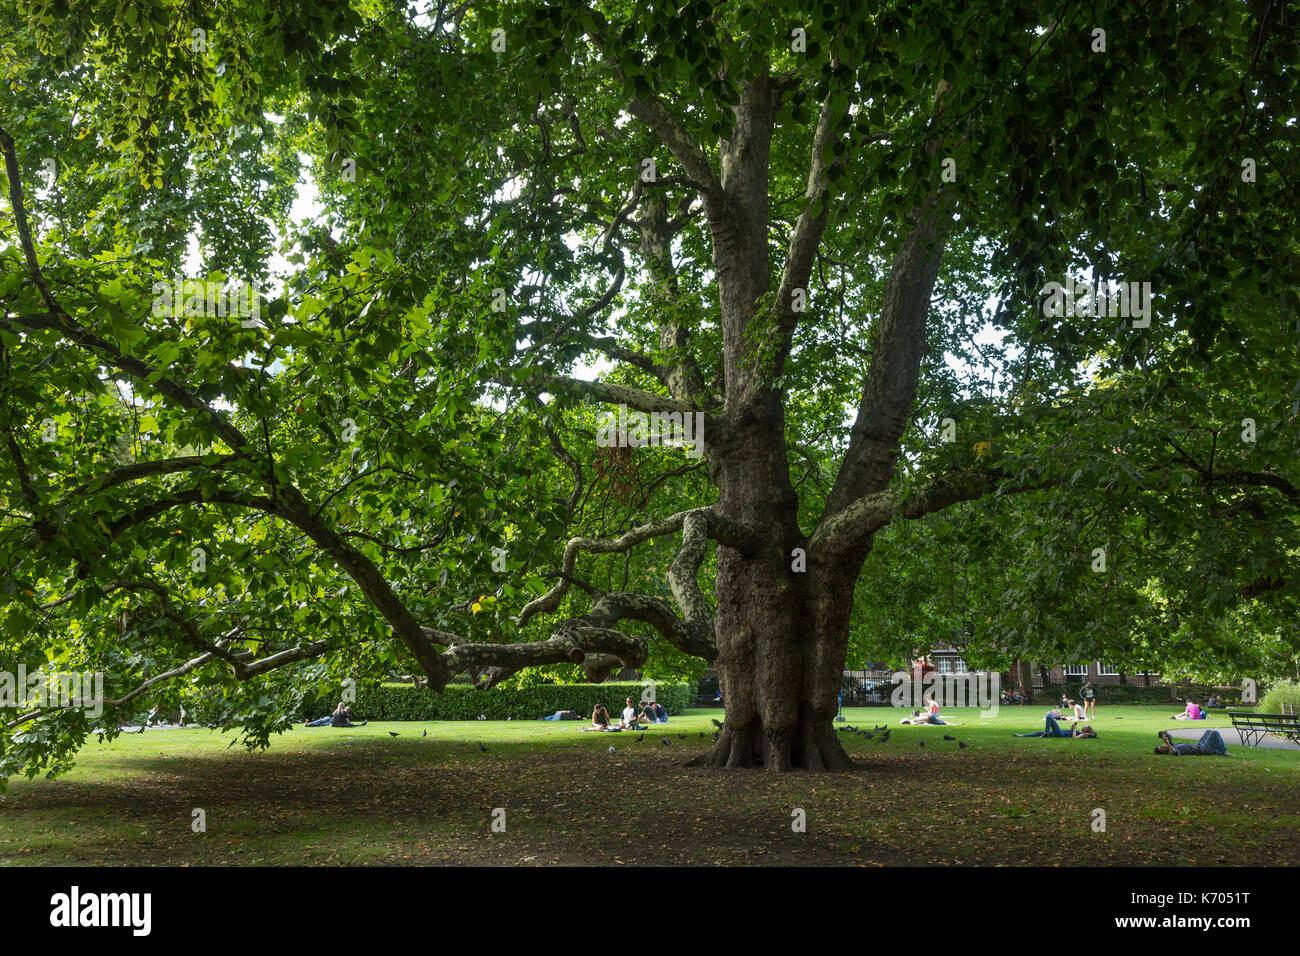 London Plane Tree, Brunswick Square, London, UK Stockfoto